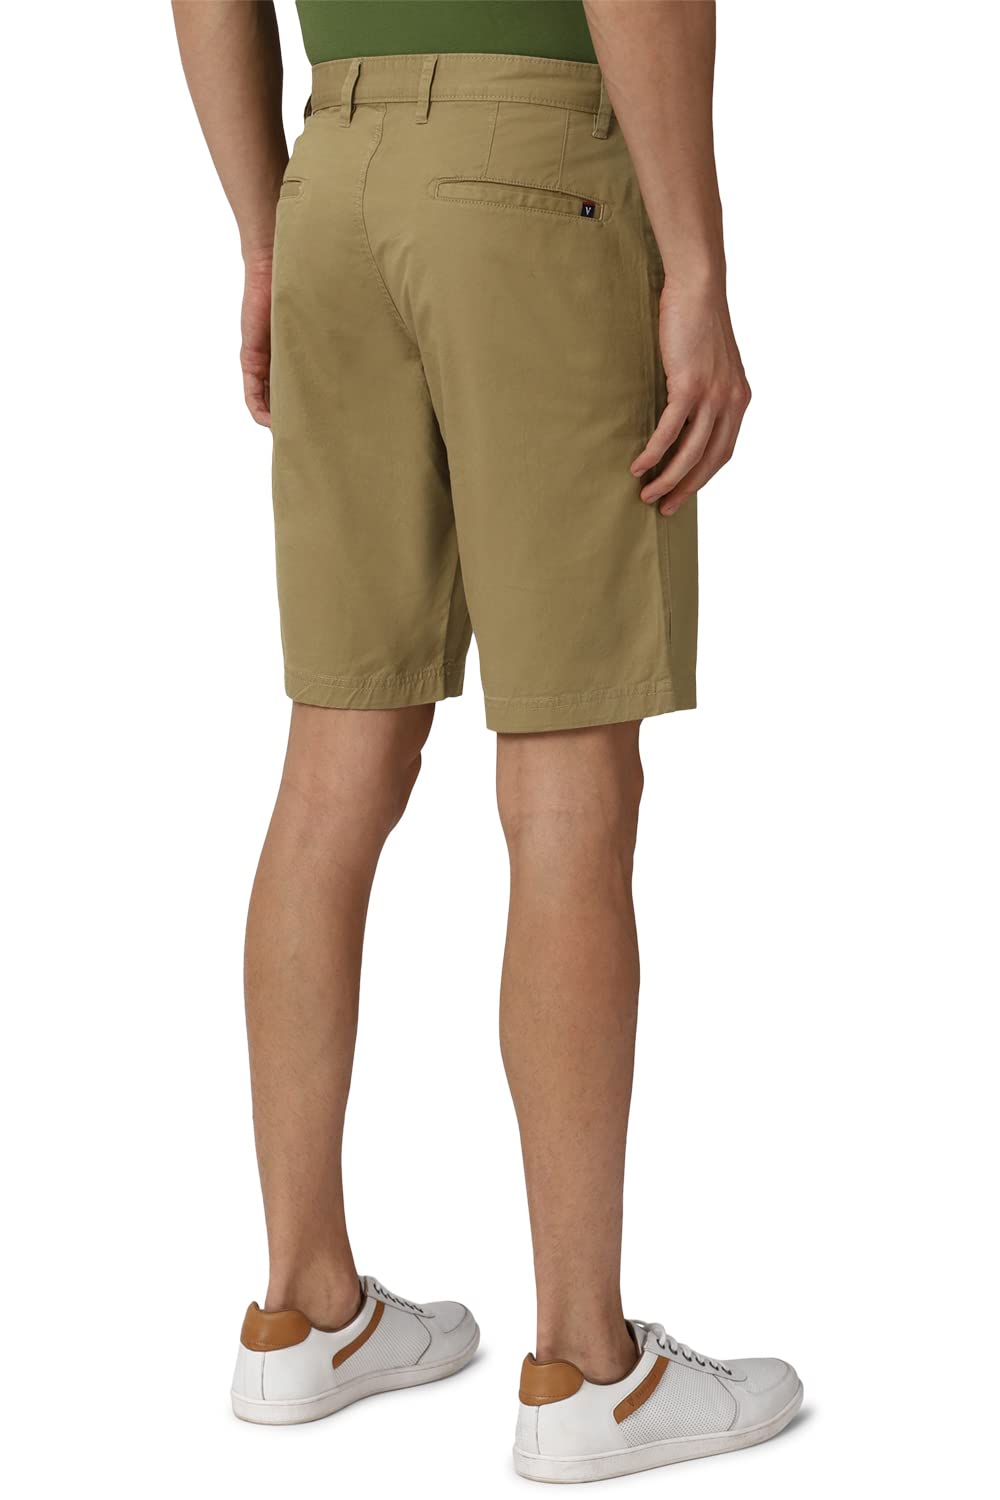 Van Heusen Men's Chino Shorts (VSSRWRGFP64304_Khaki_XL)